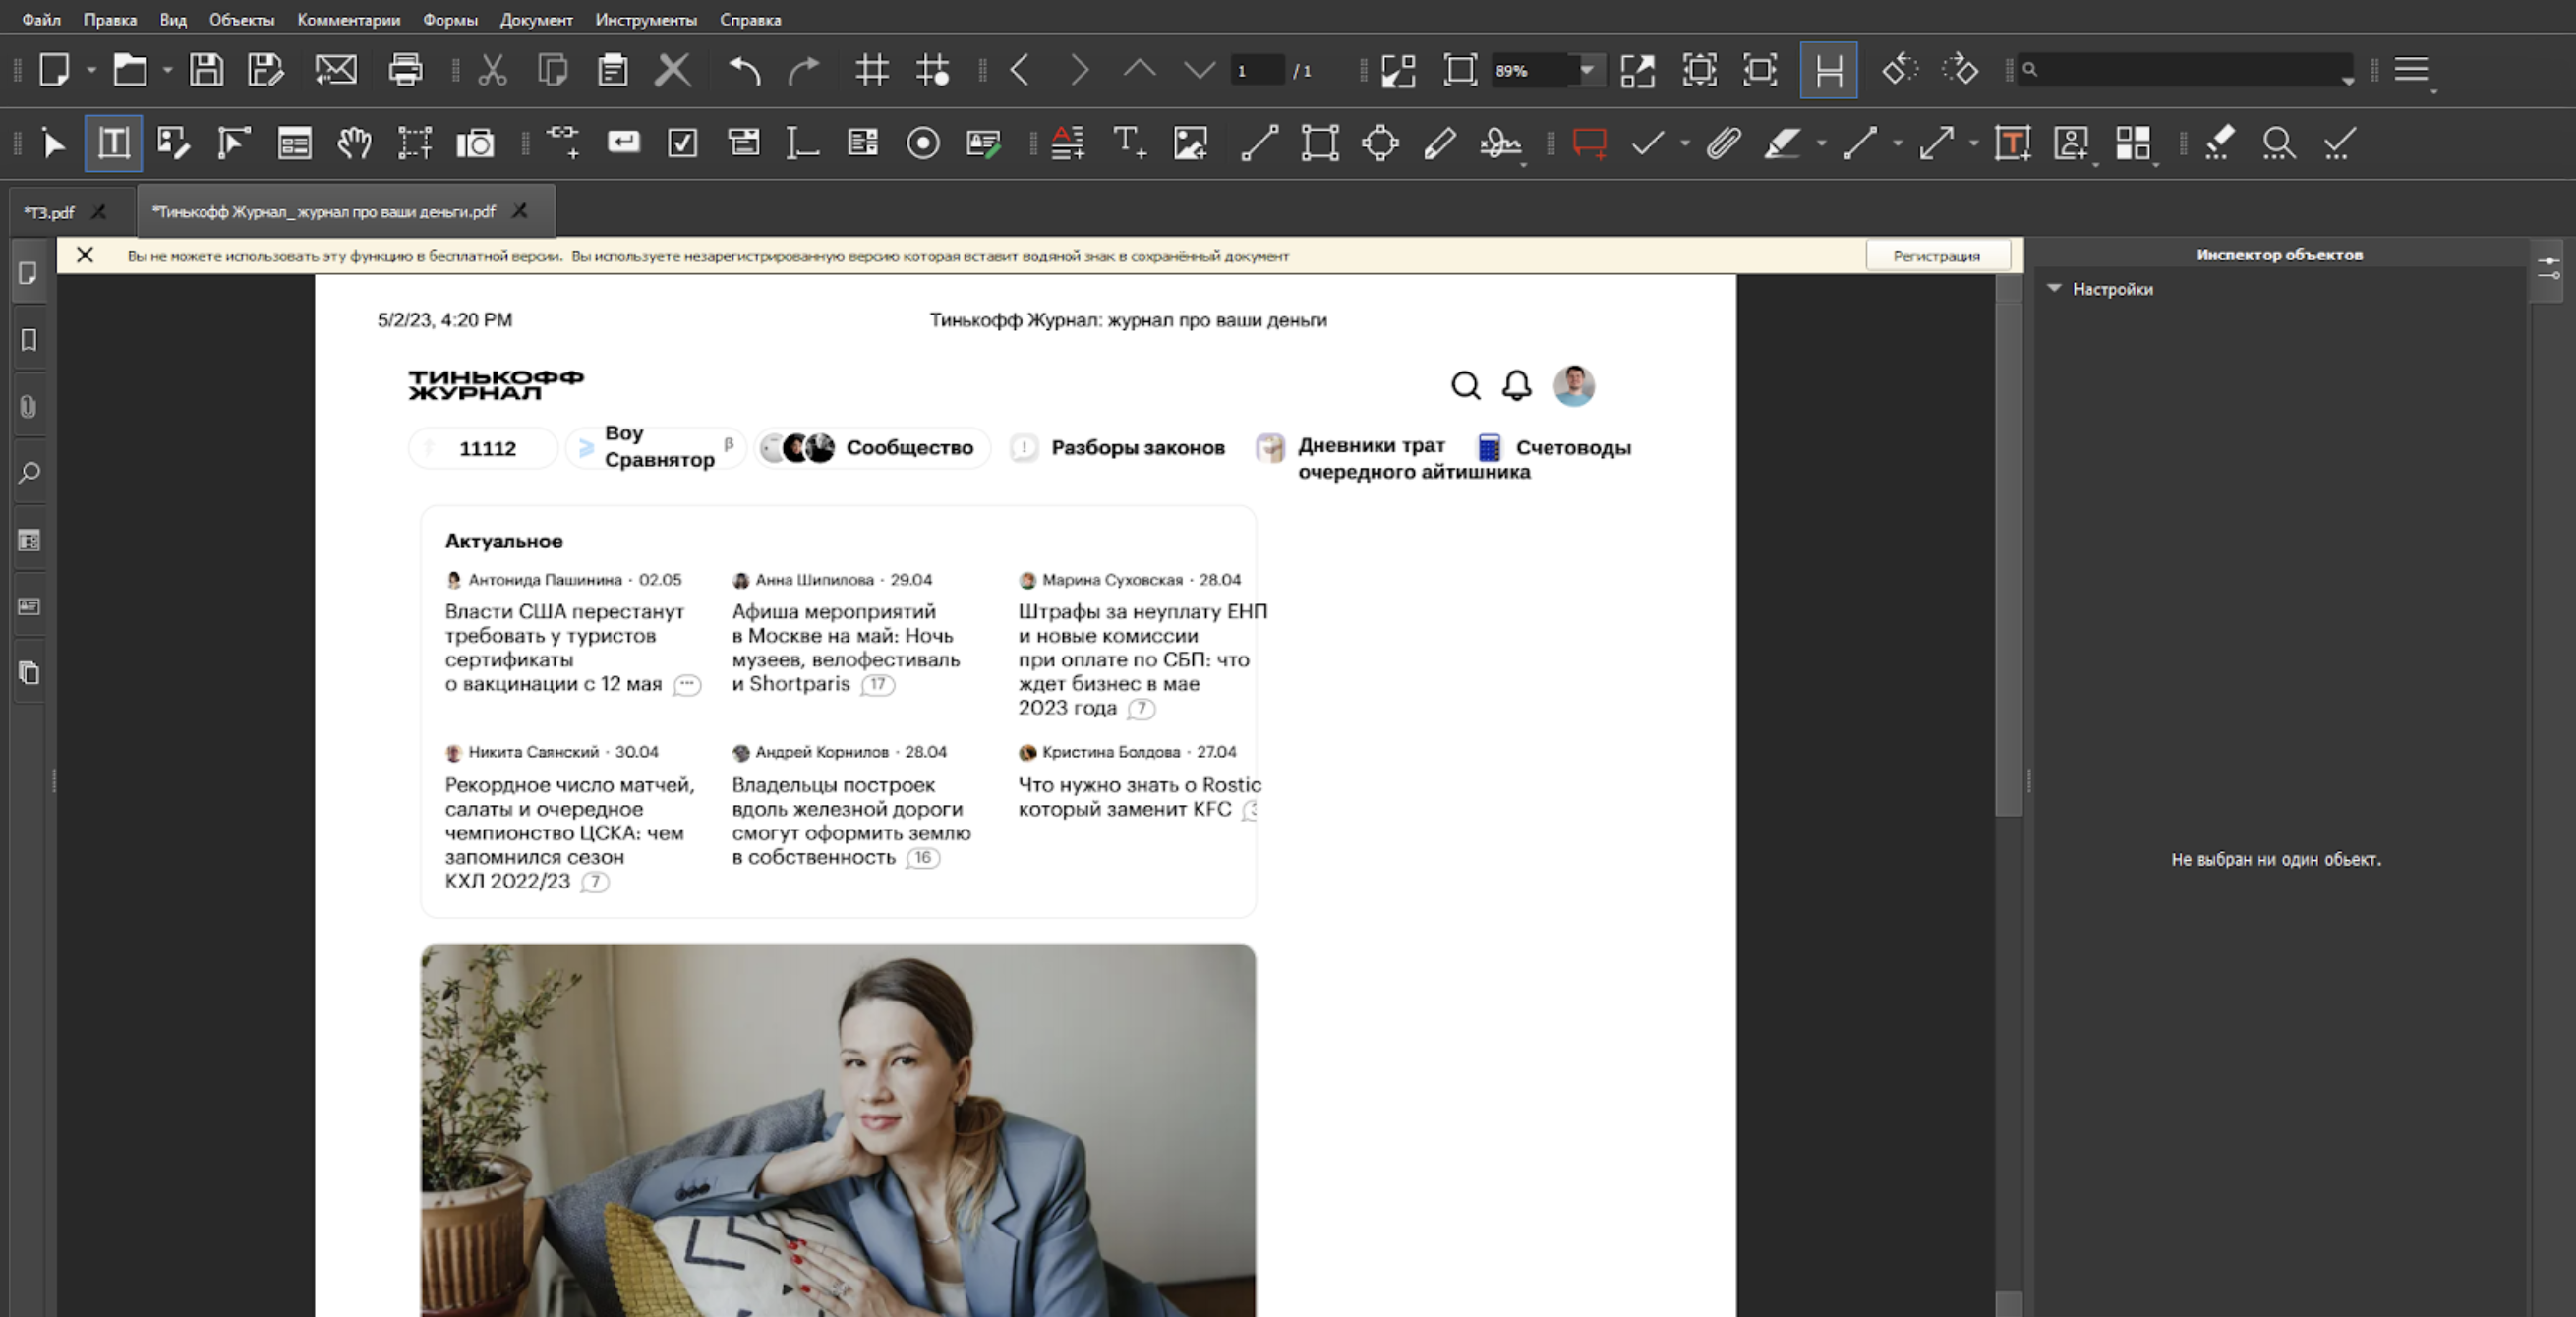 Интерфейс Master PDF Editor похож одновременно на Microsoft Word и Adobe Photoshop